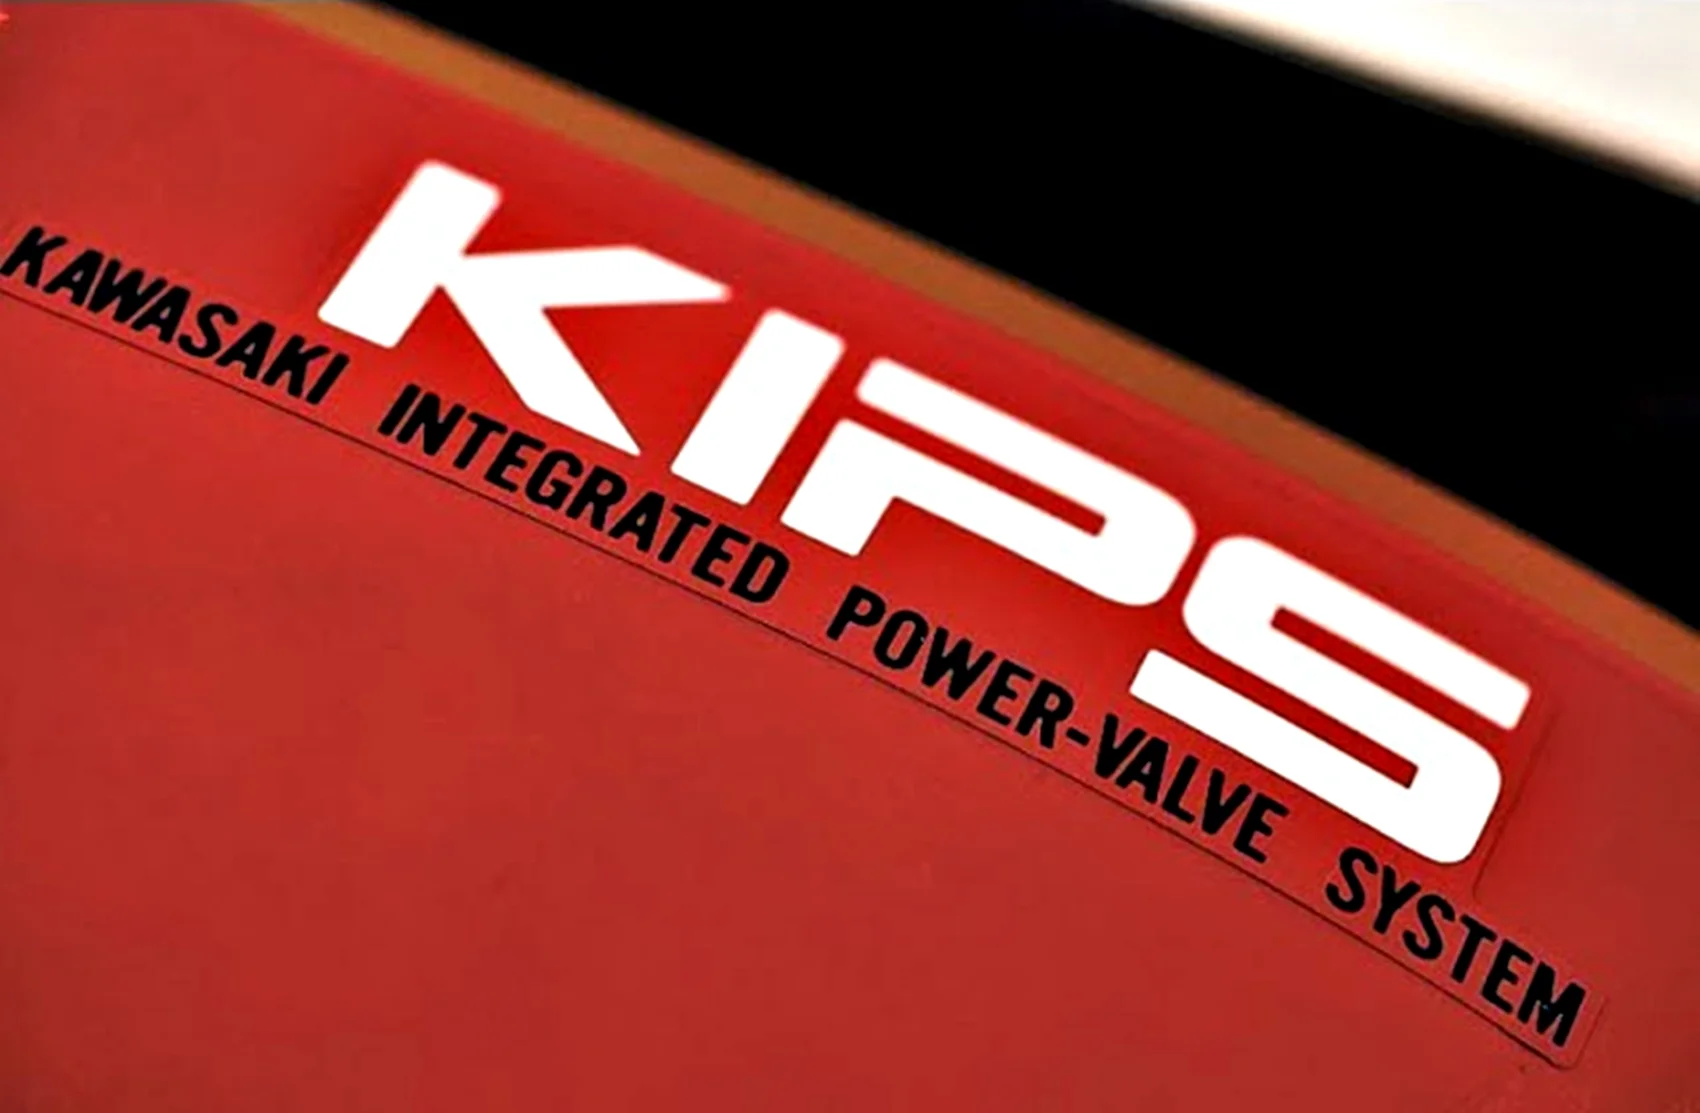 Kawasaki Integrated Powervalve System alias KIPS.